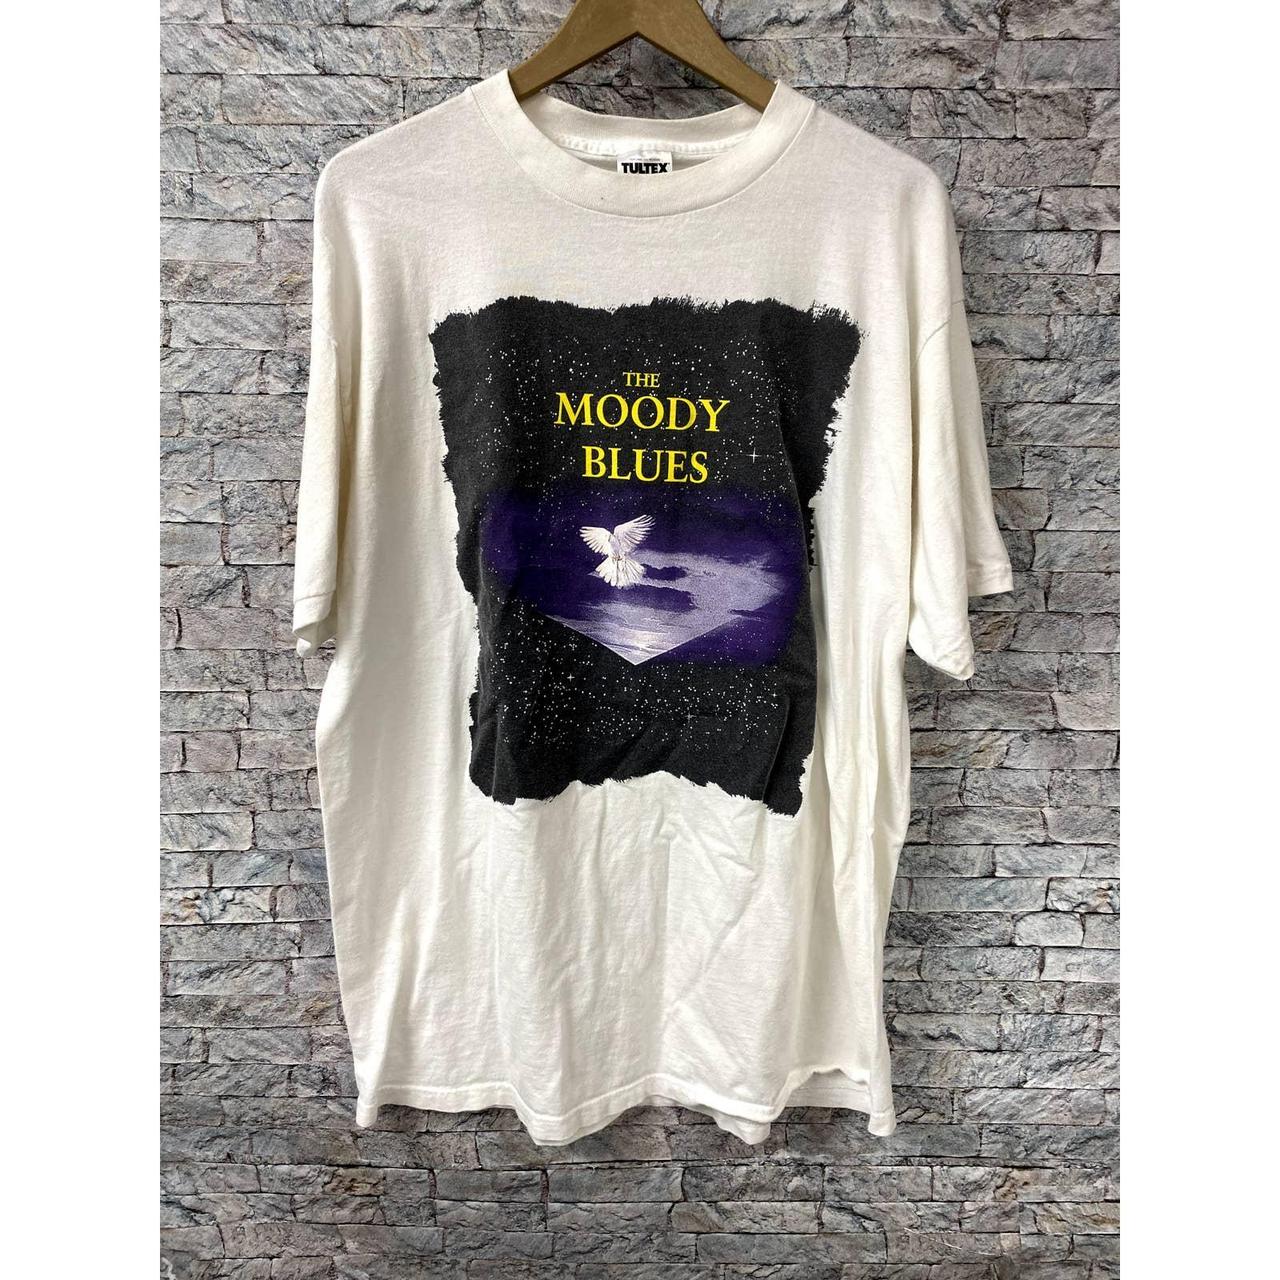 90s vintage The Moody Blues band t-shirt XL... - Depop